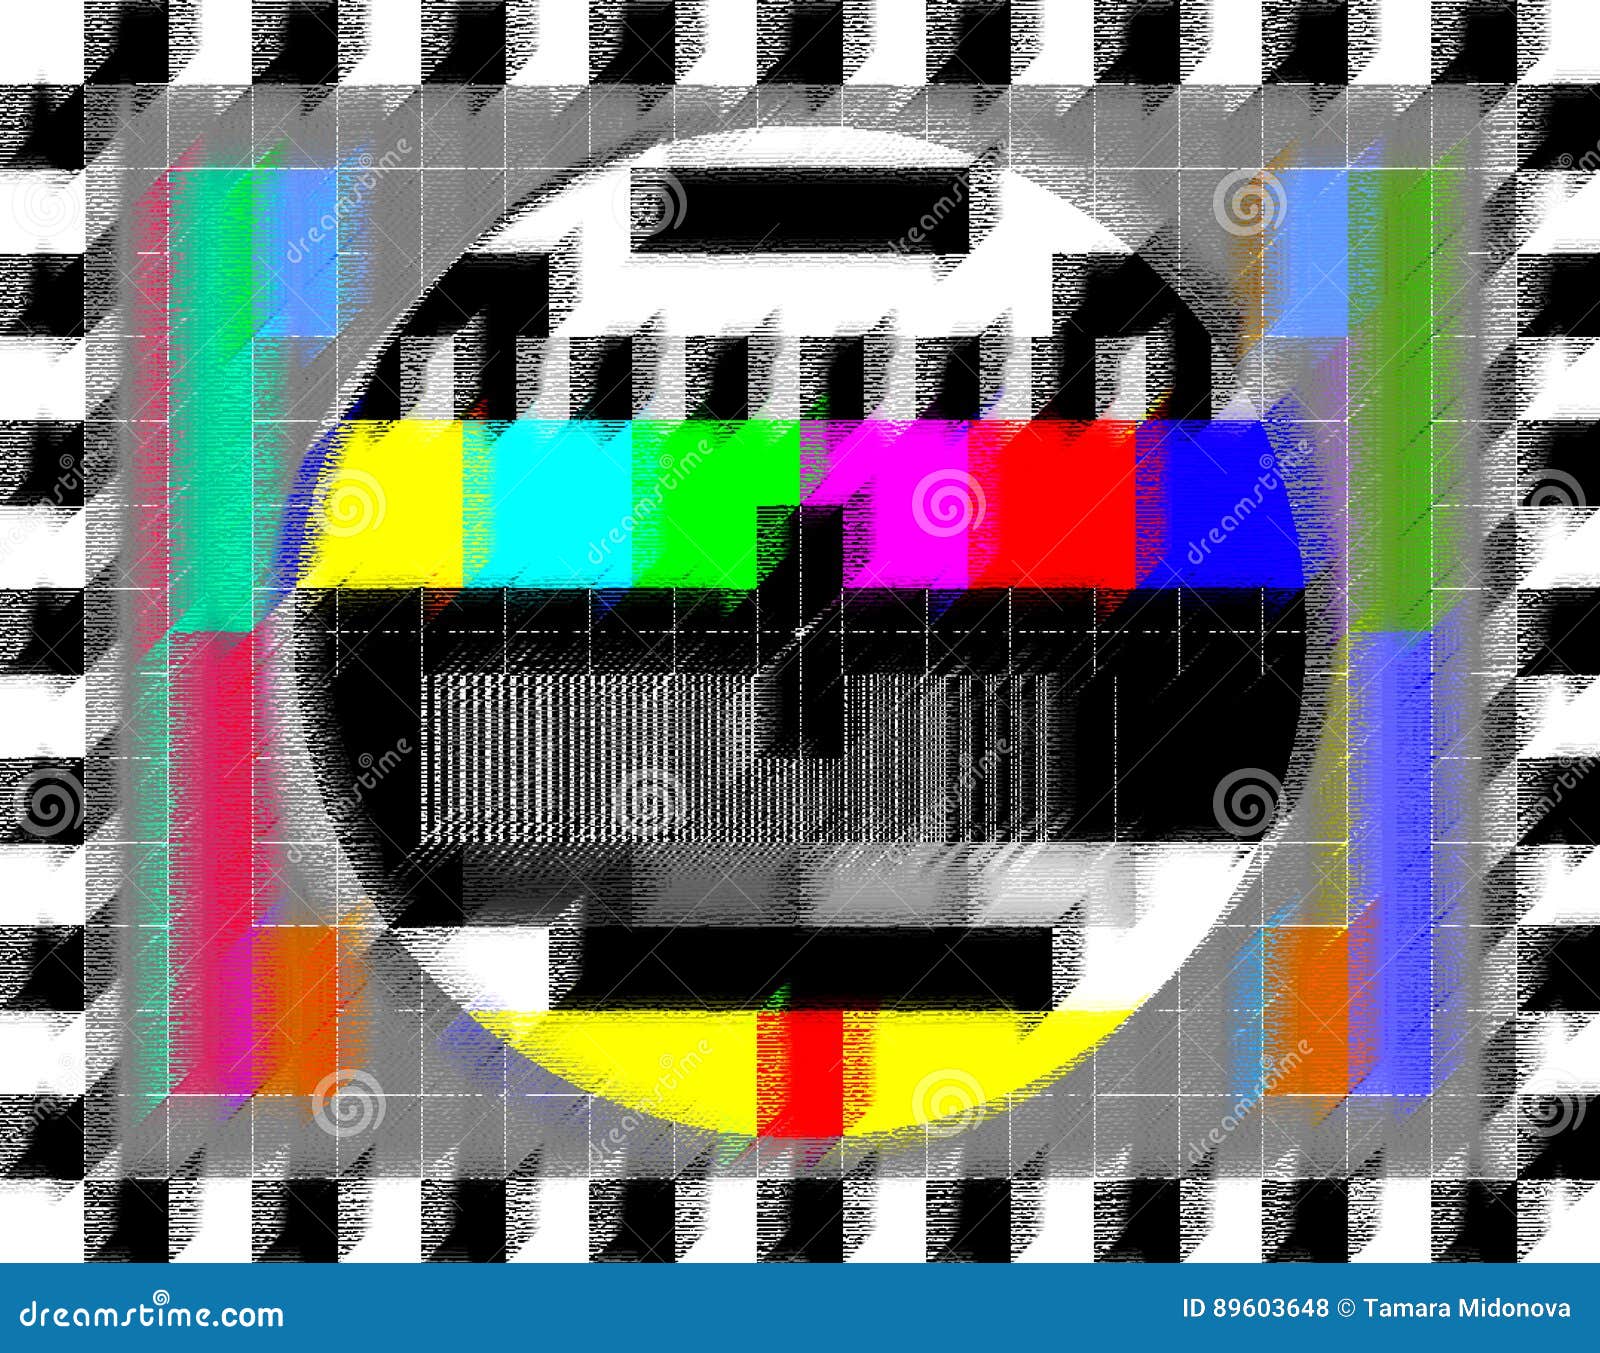 tv test image